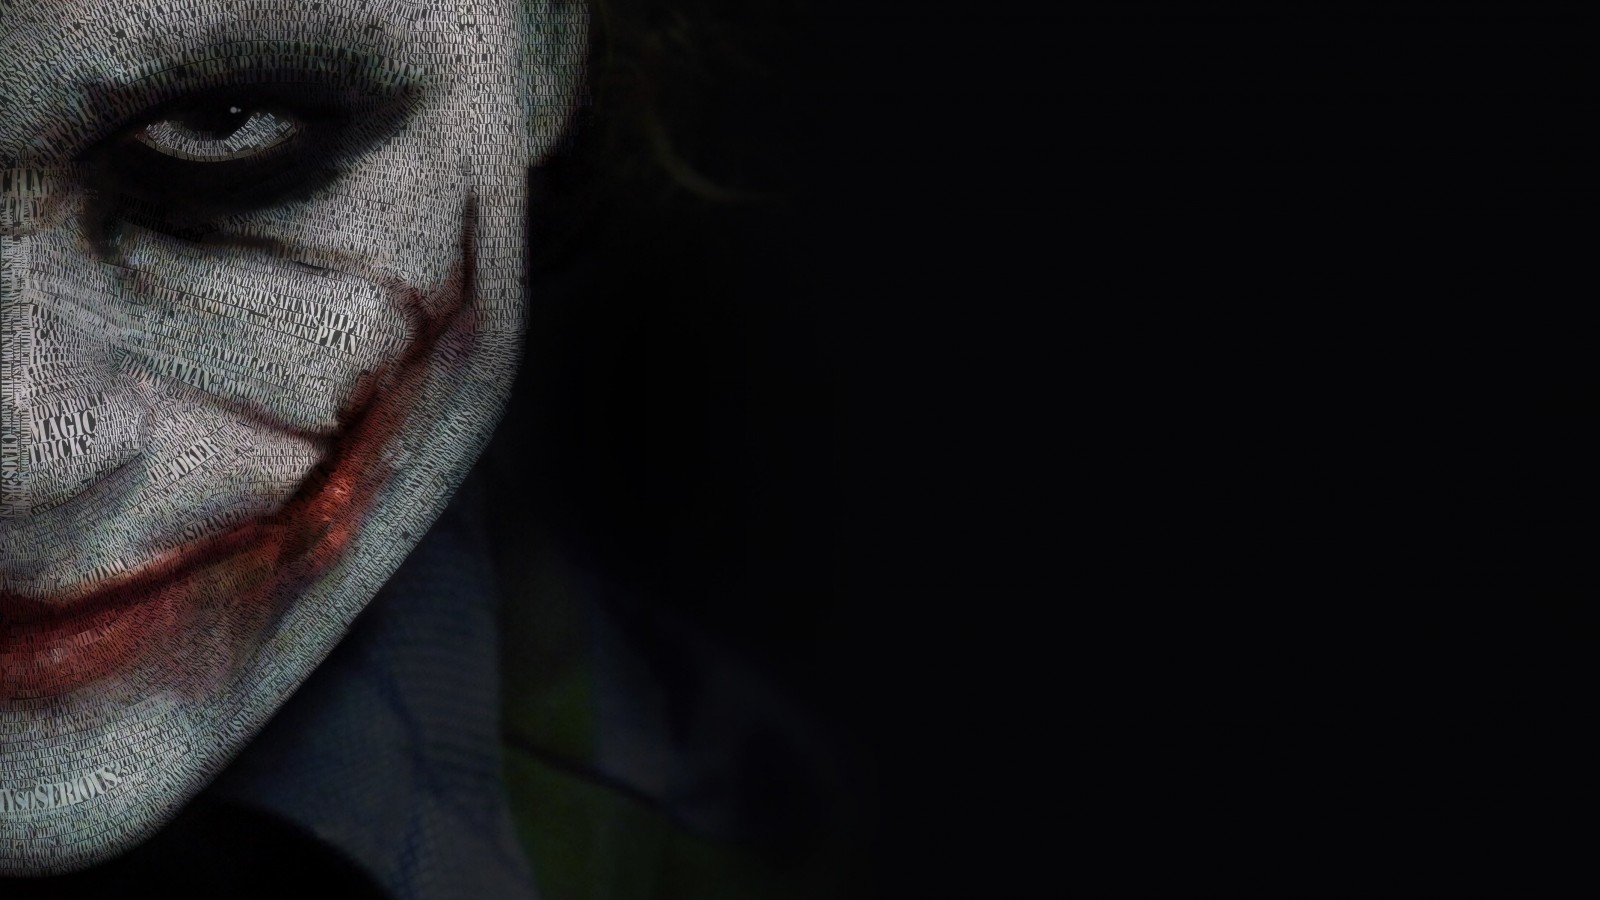 The Joker Typeface Portrait Wallpaper for Desktop 1600x900